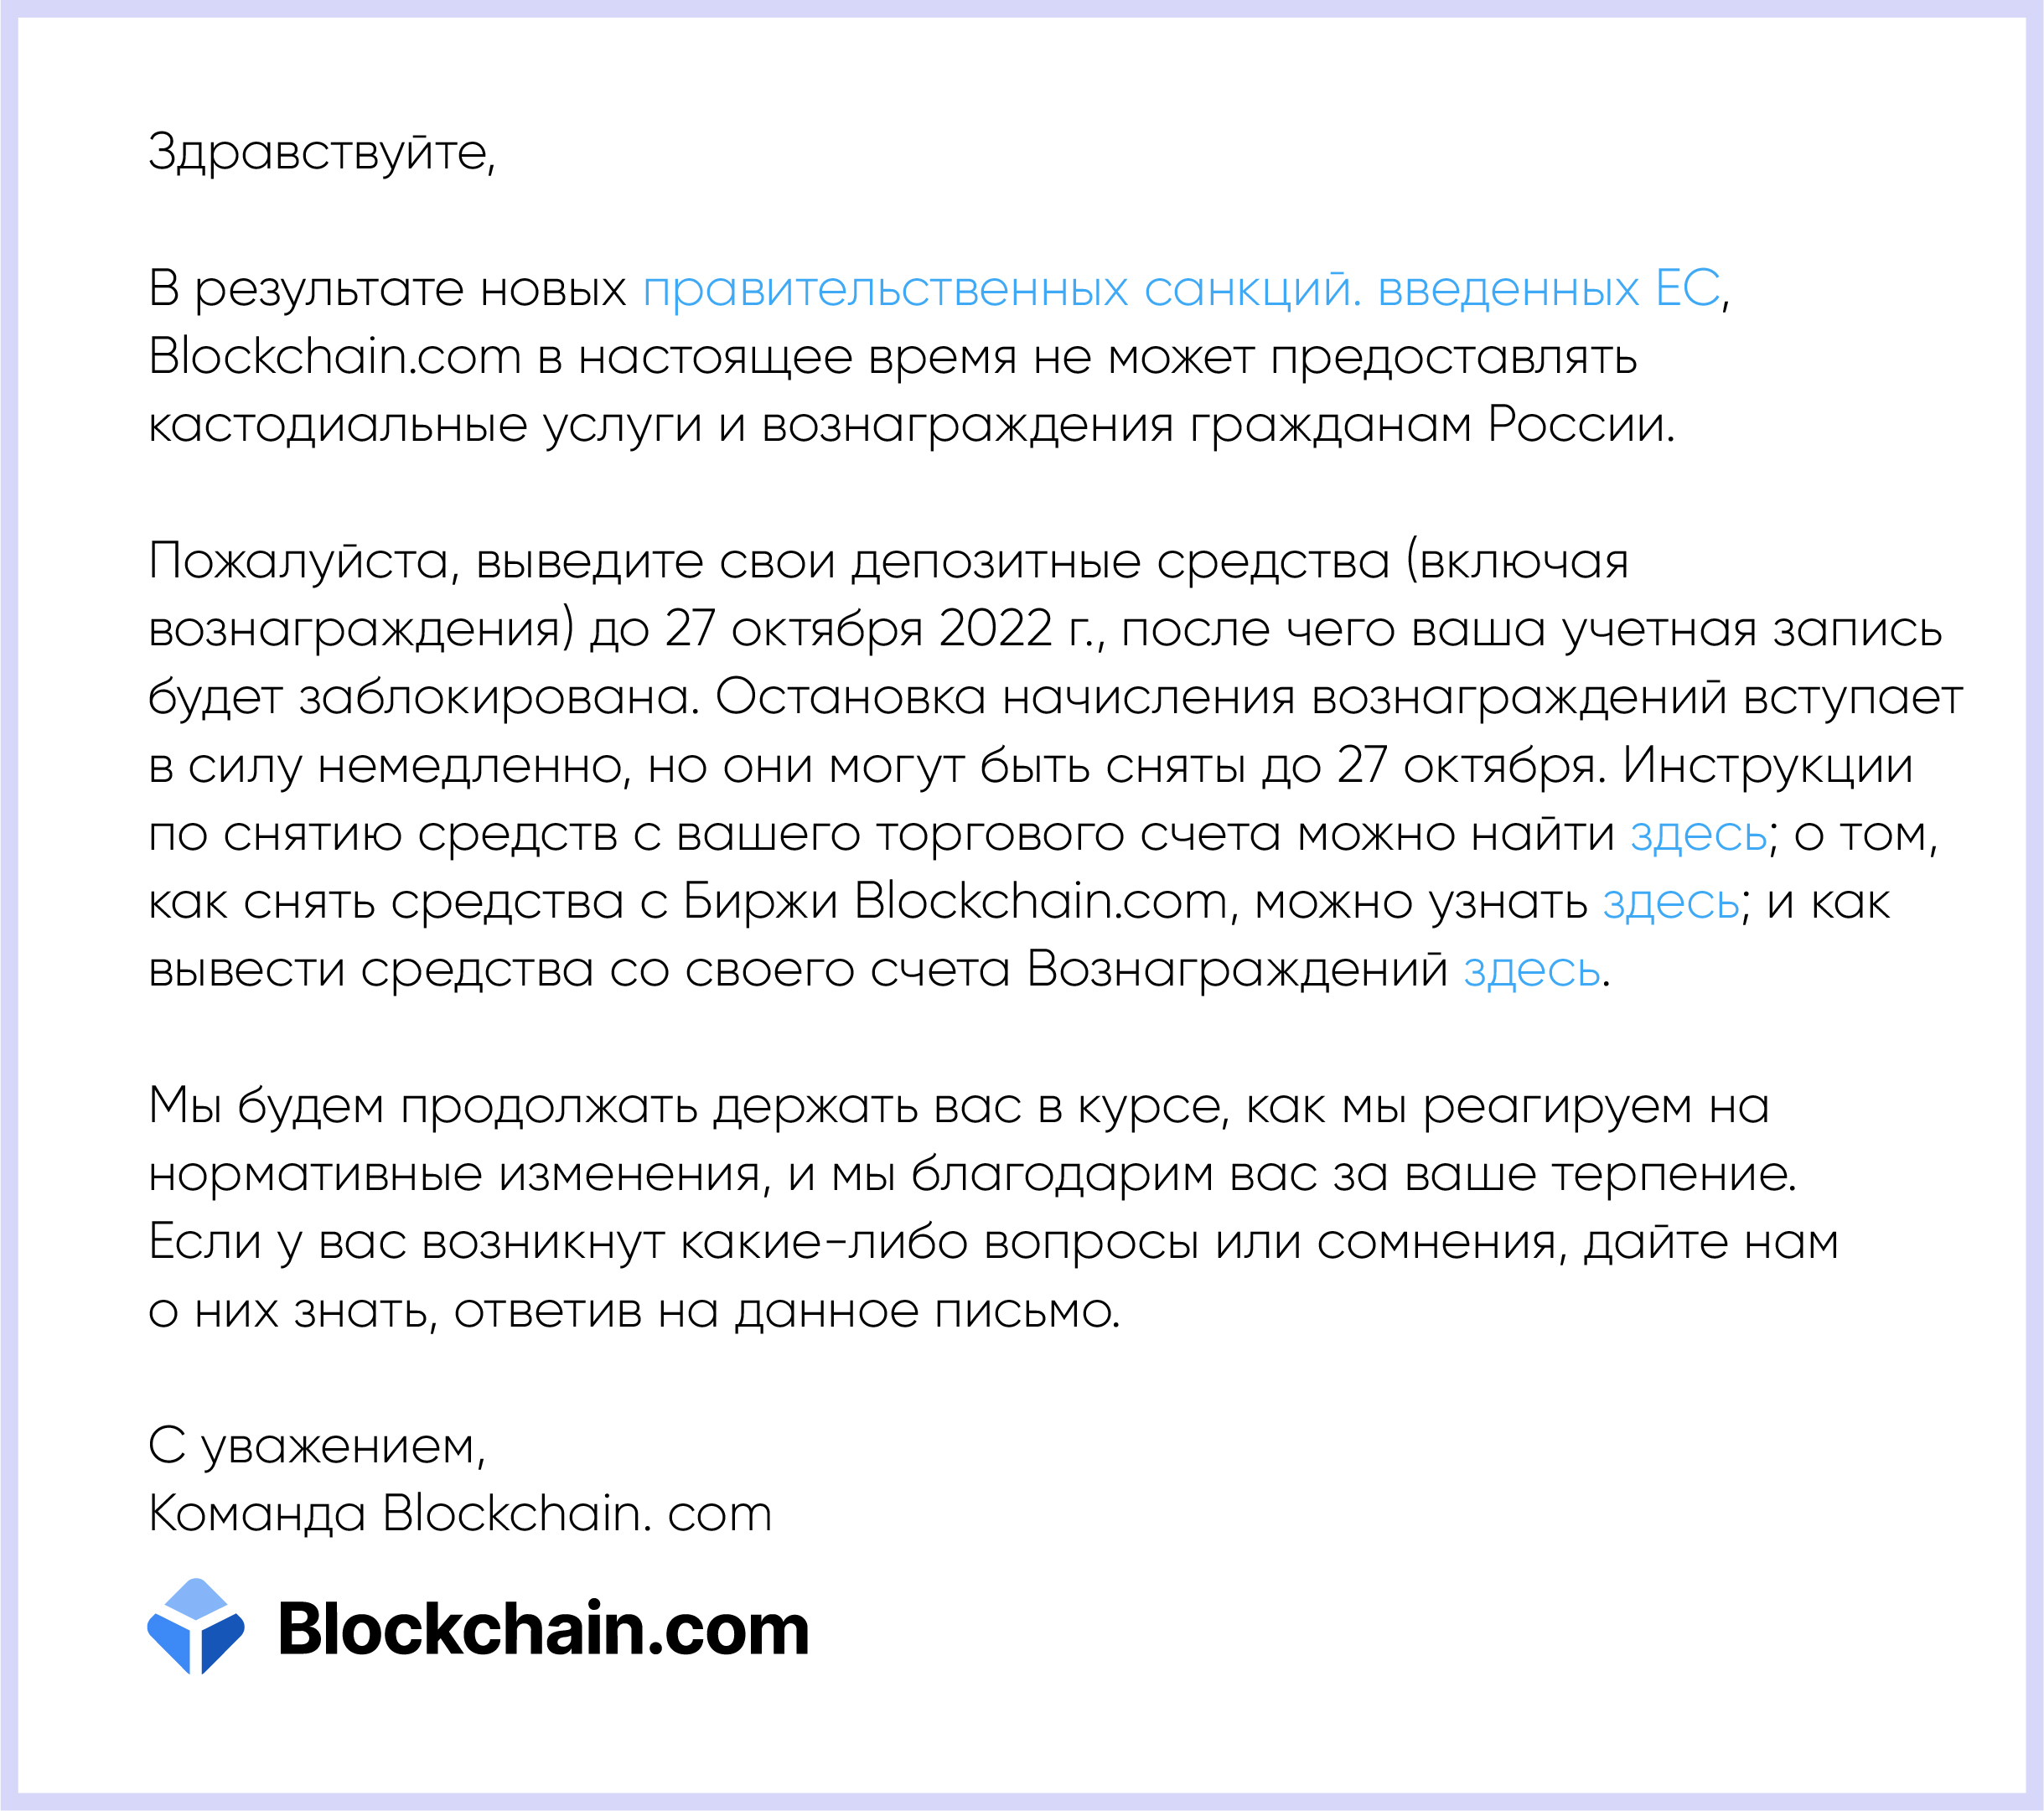 Crypto.com и Blockchain.com прекращают предоставлять услуги гражданам РФ